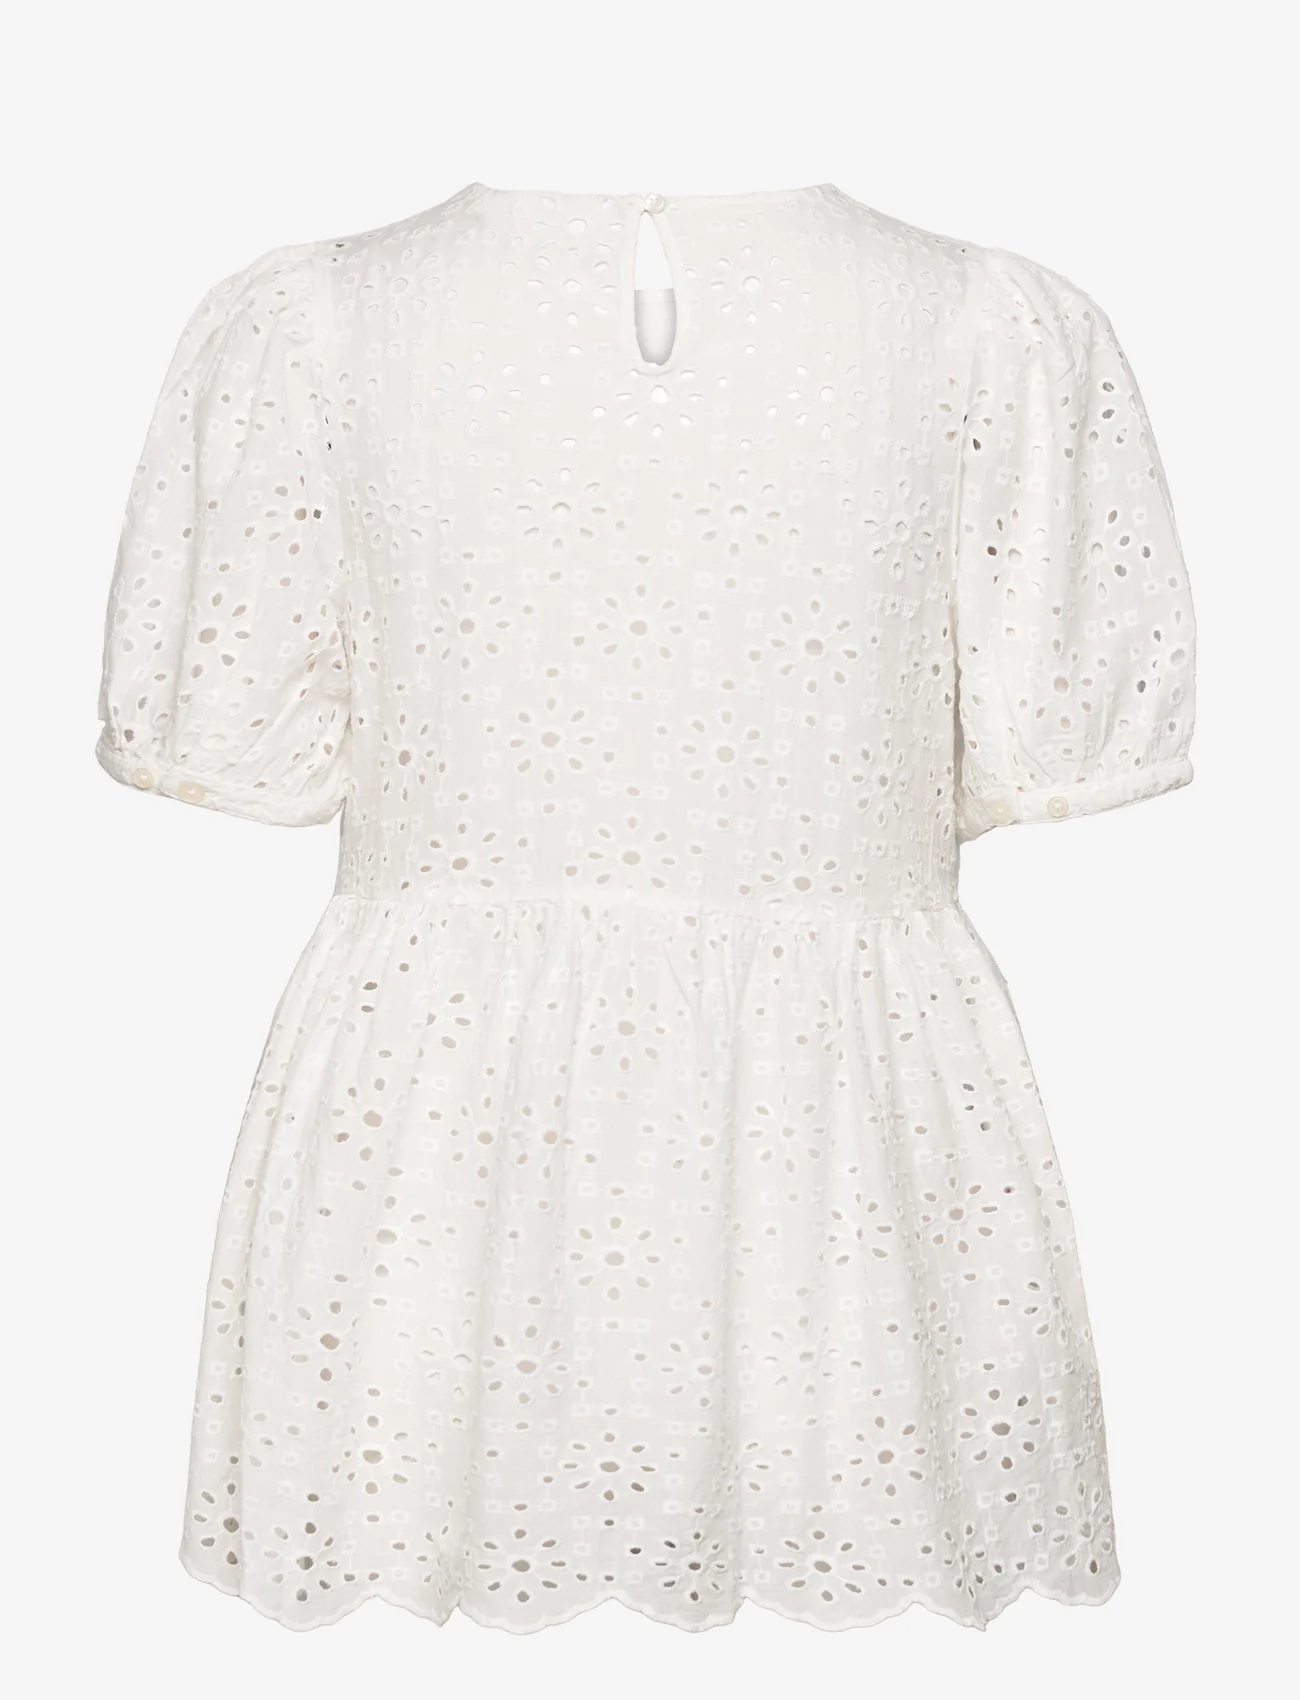 Lexington Clothing - Nova Broderie Anglaise Top - short-sleeved blouses - white - 1